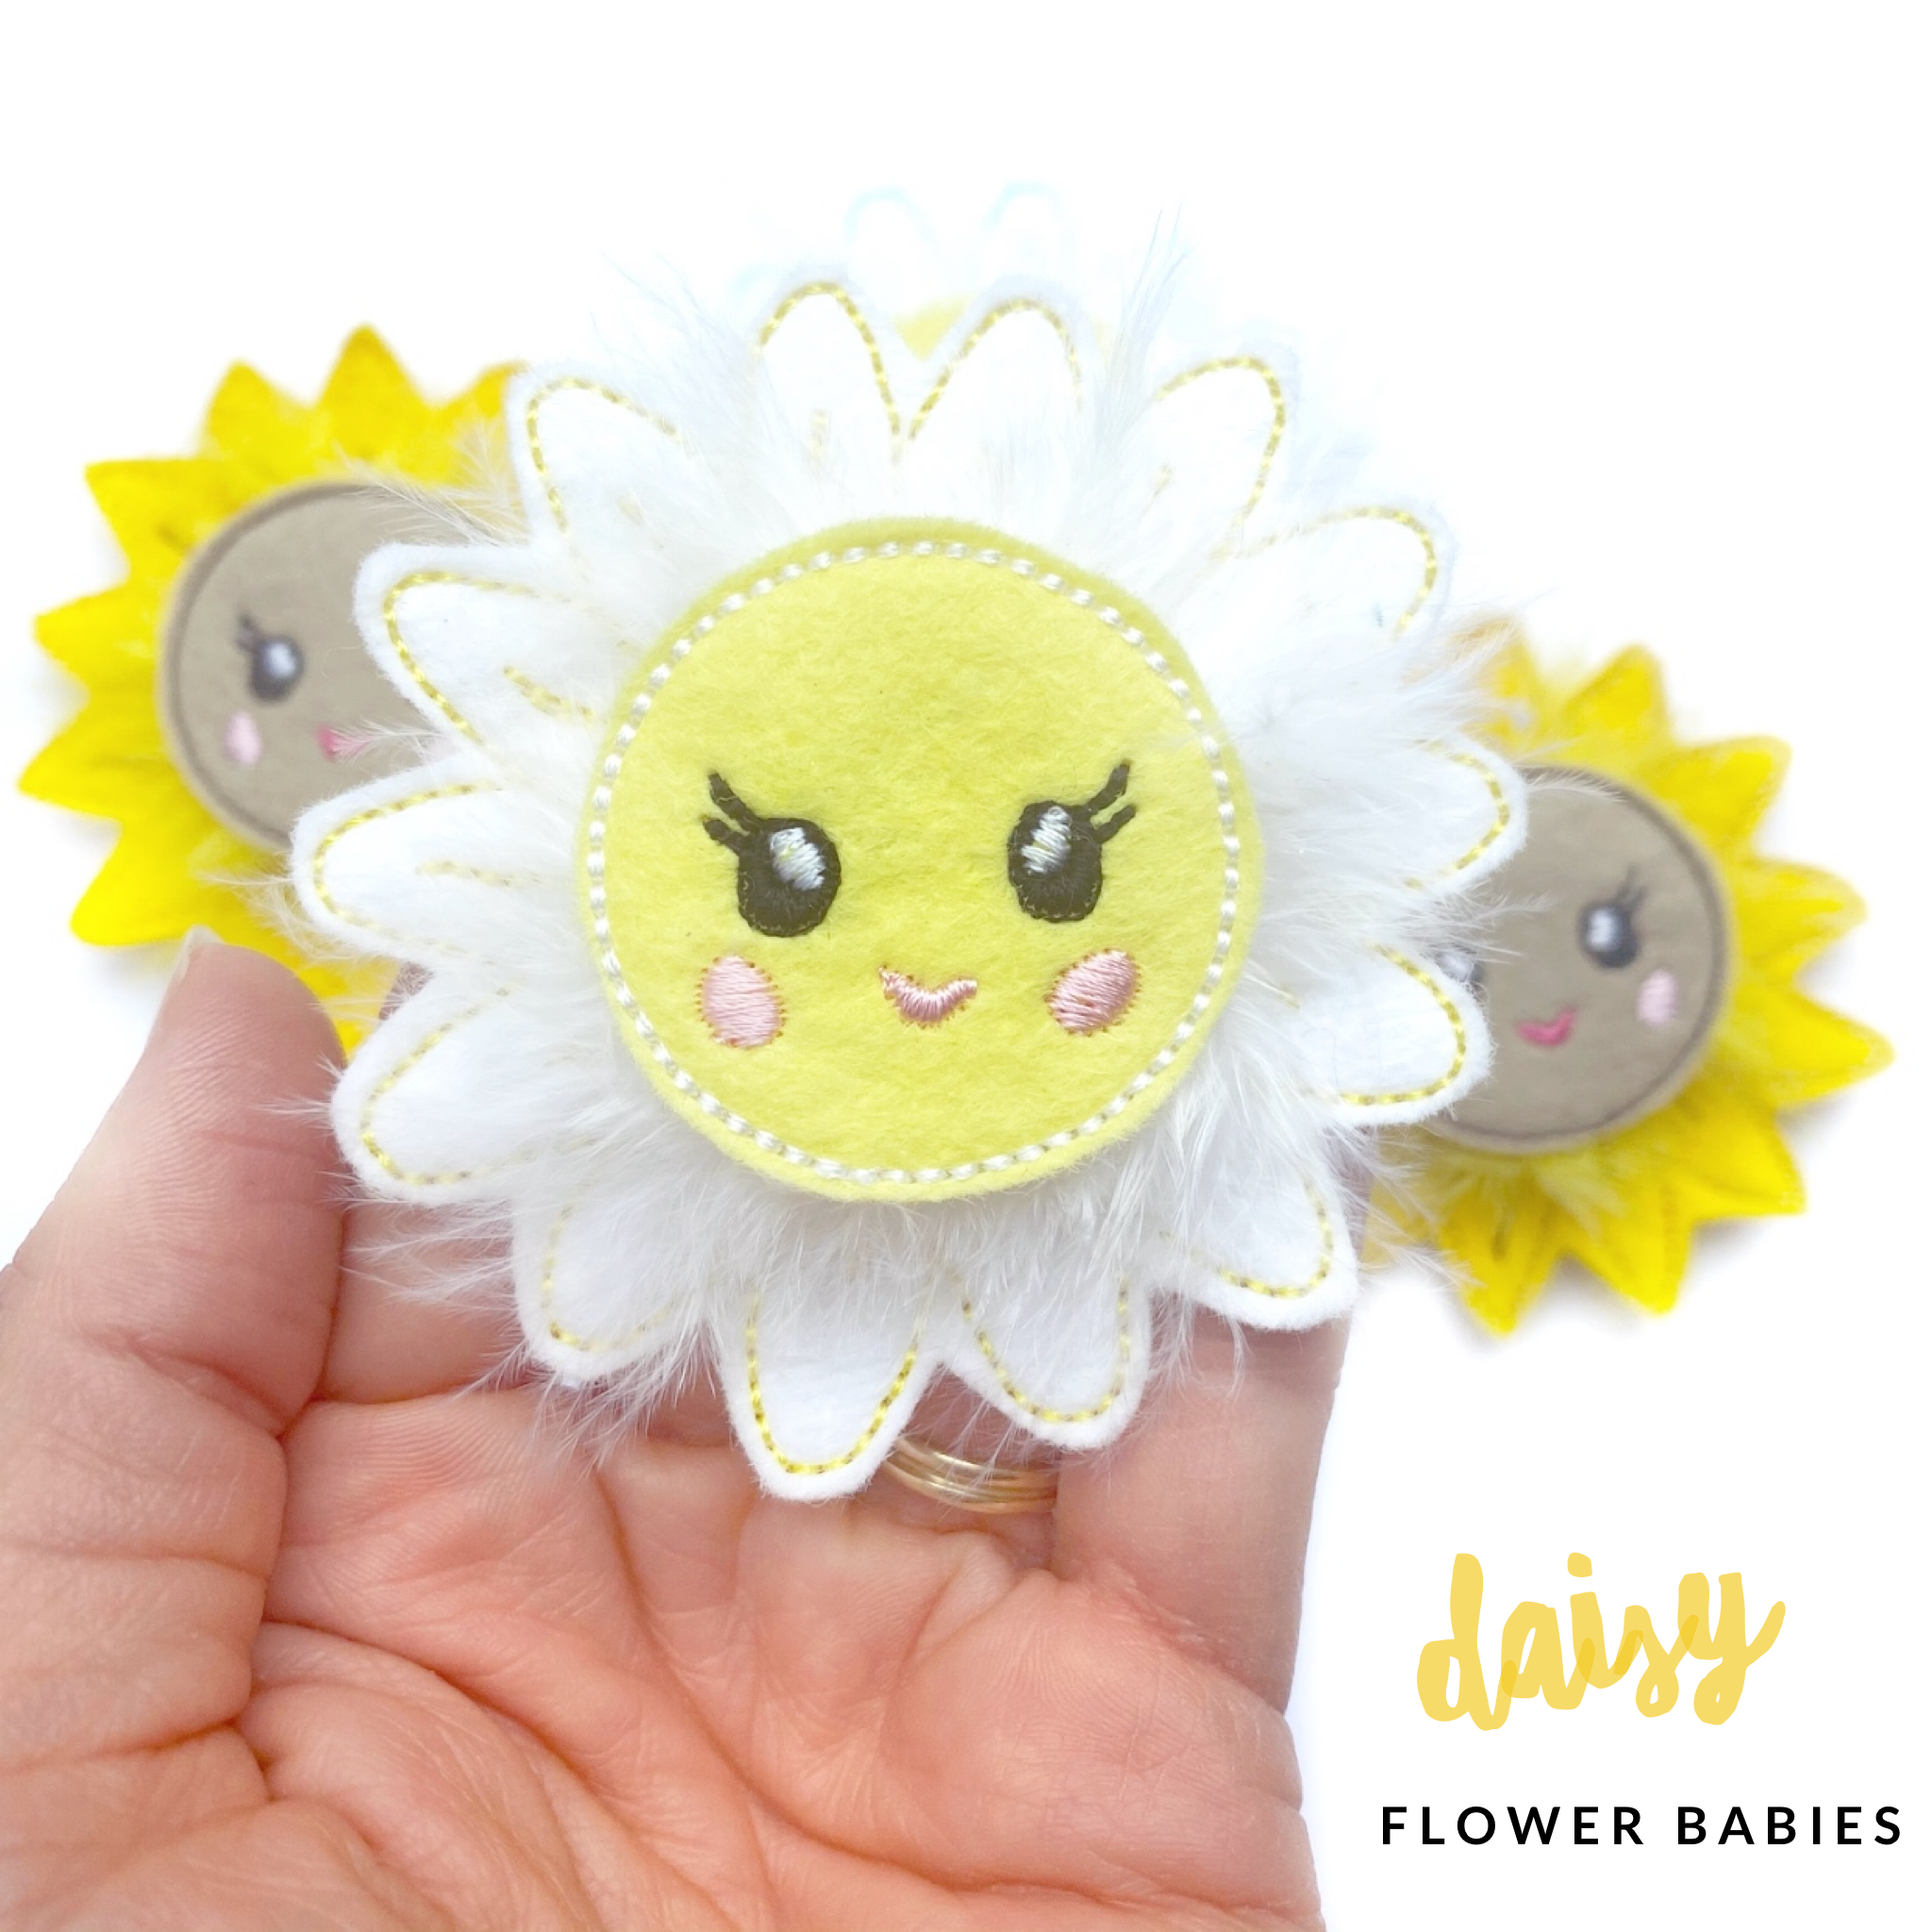 Daisy Flower Felties- Fluffy Flower Babies